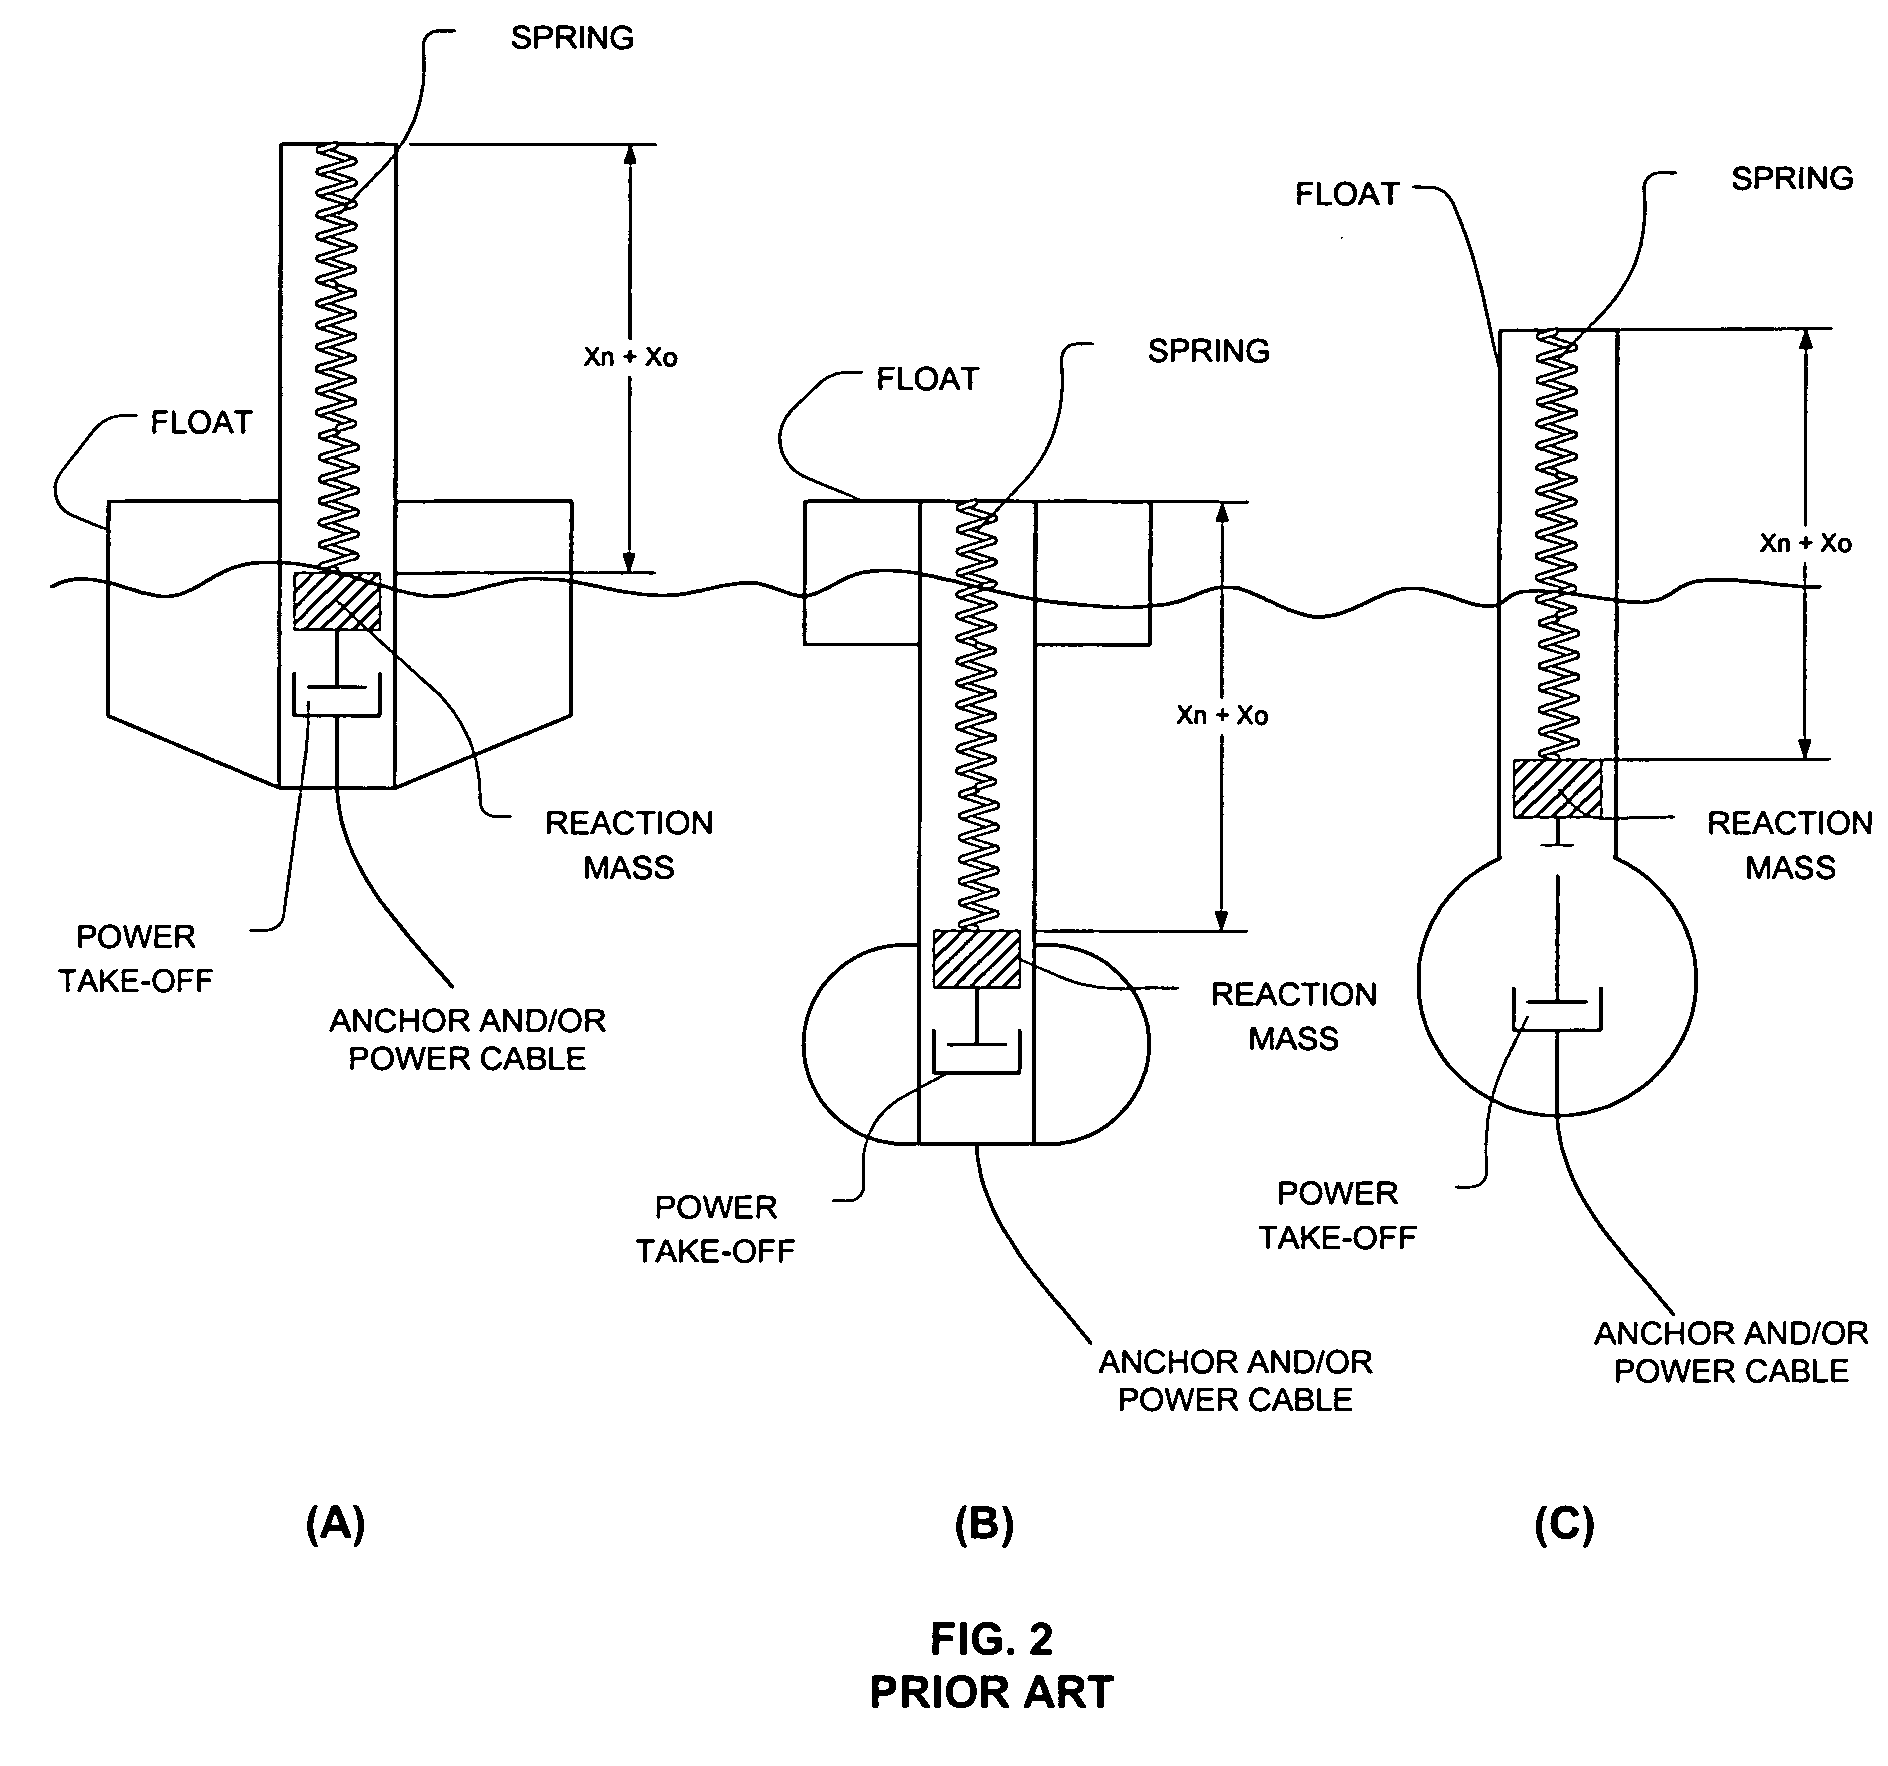 Wave energy converter with internal mass on spring oscillator